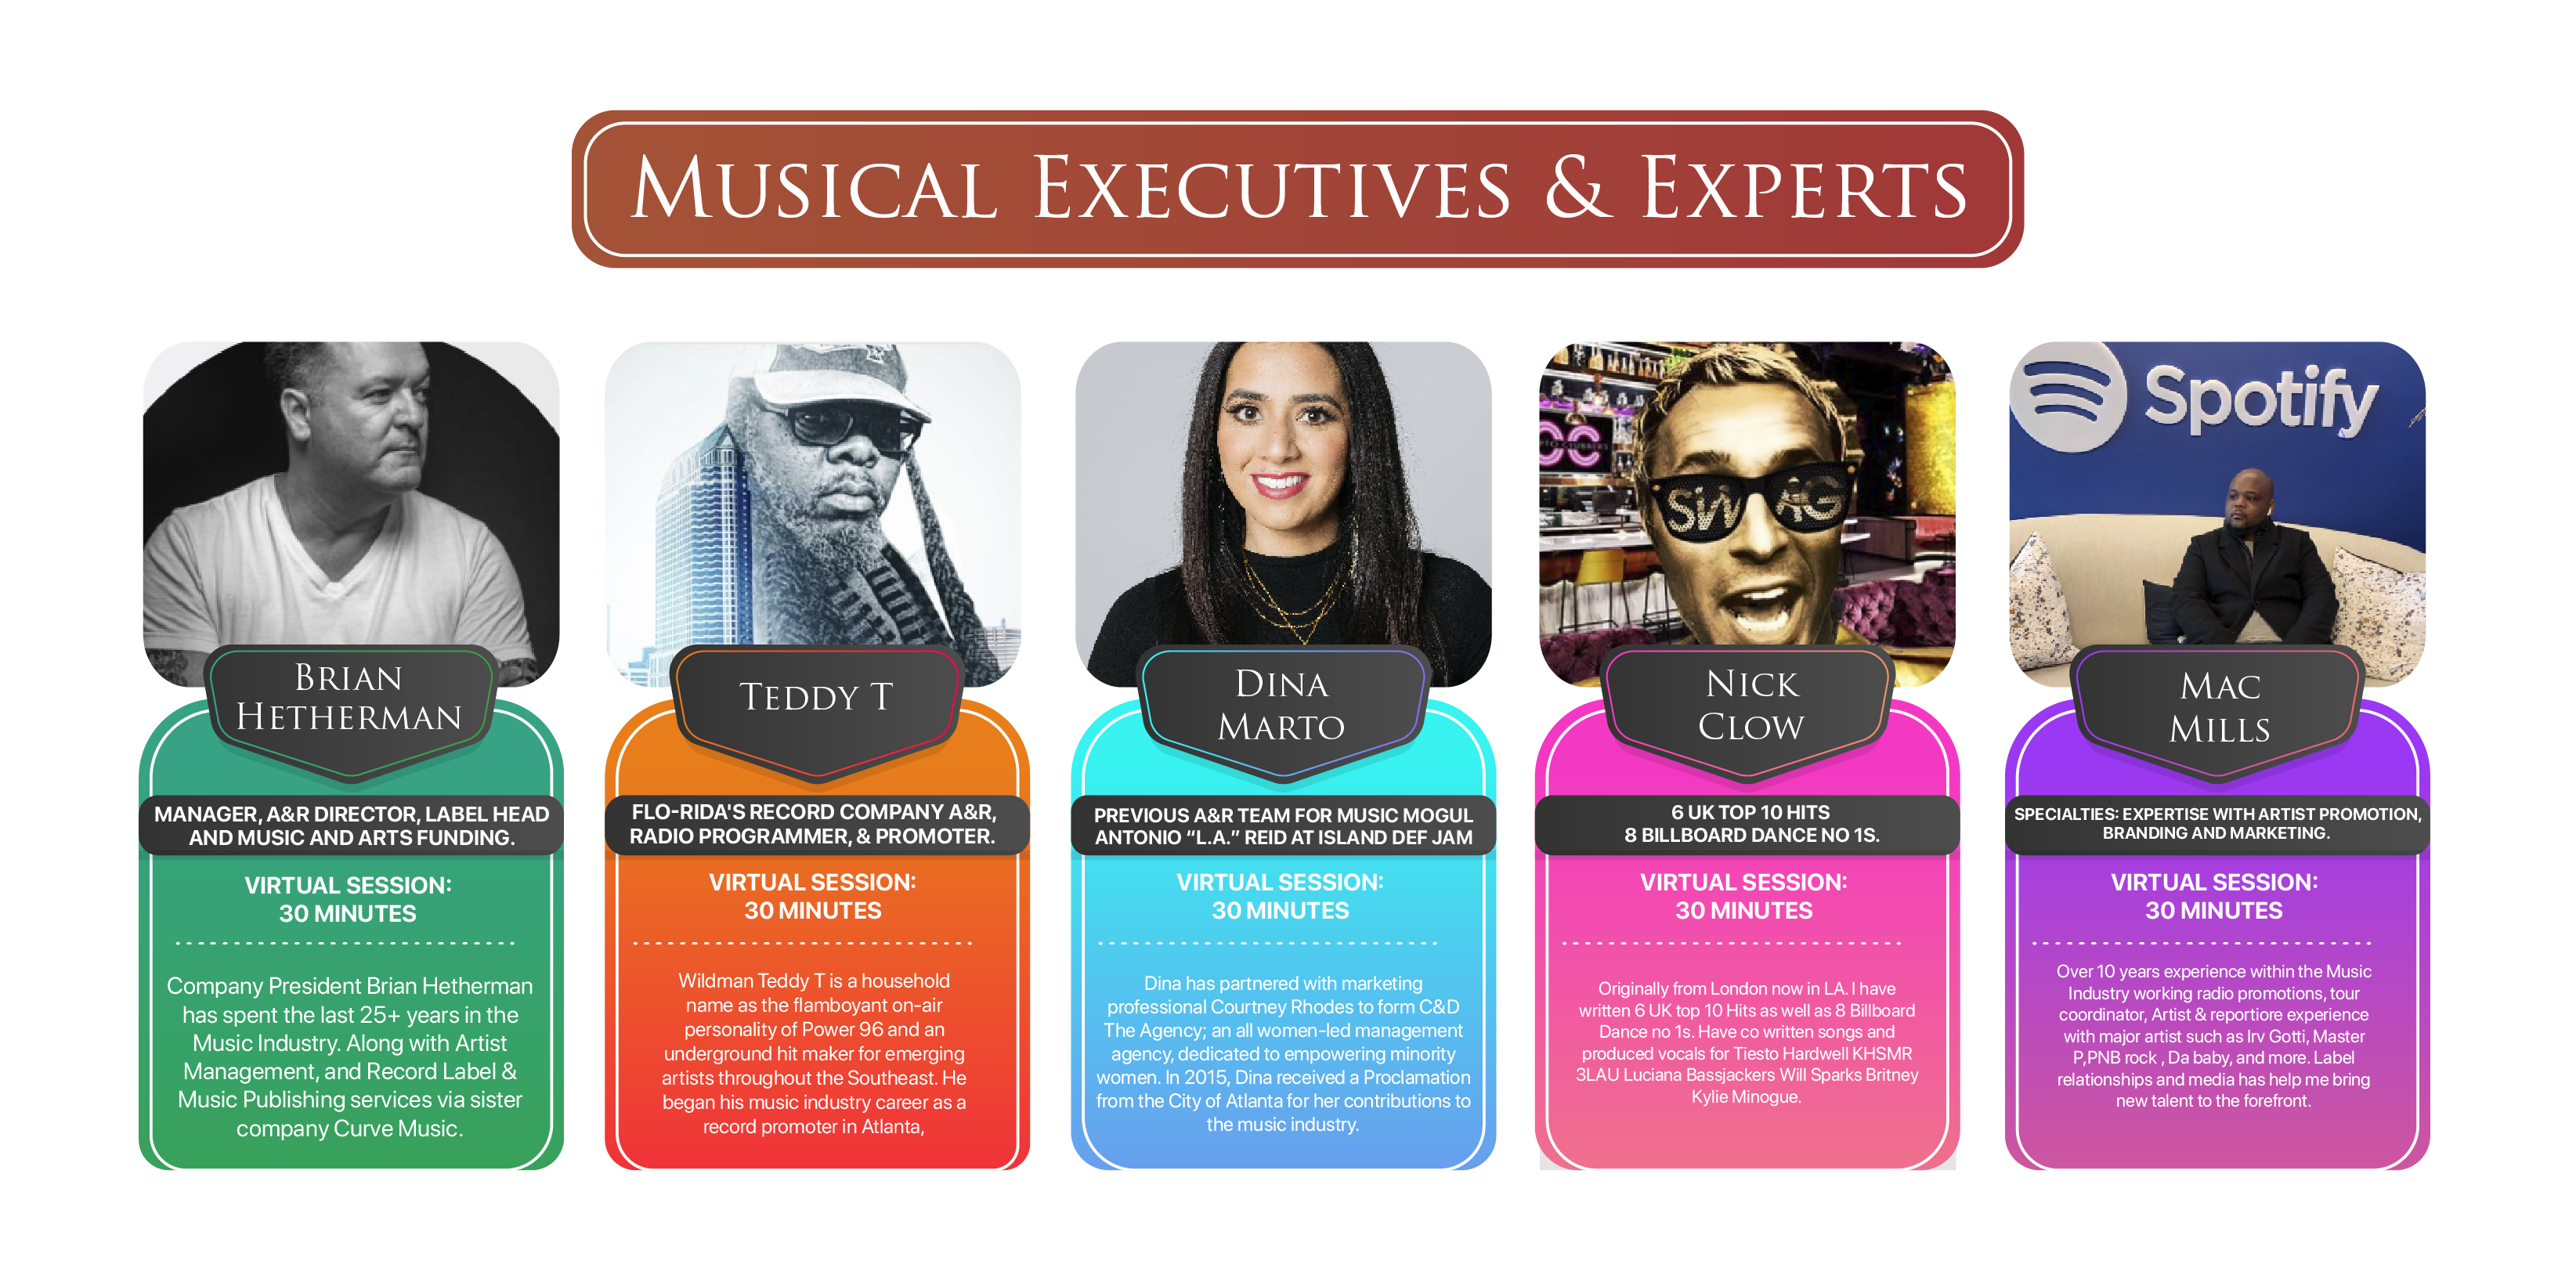 Meetem music industry experts